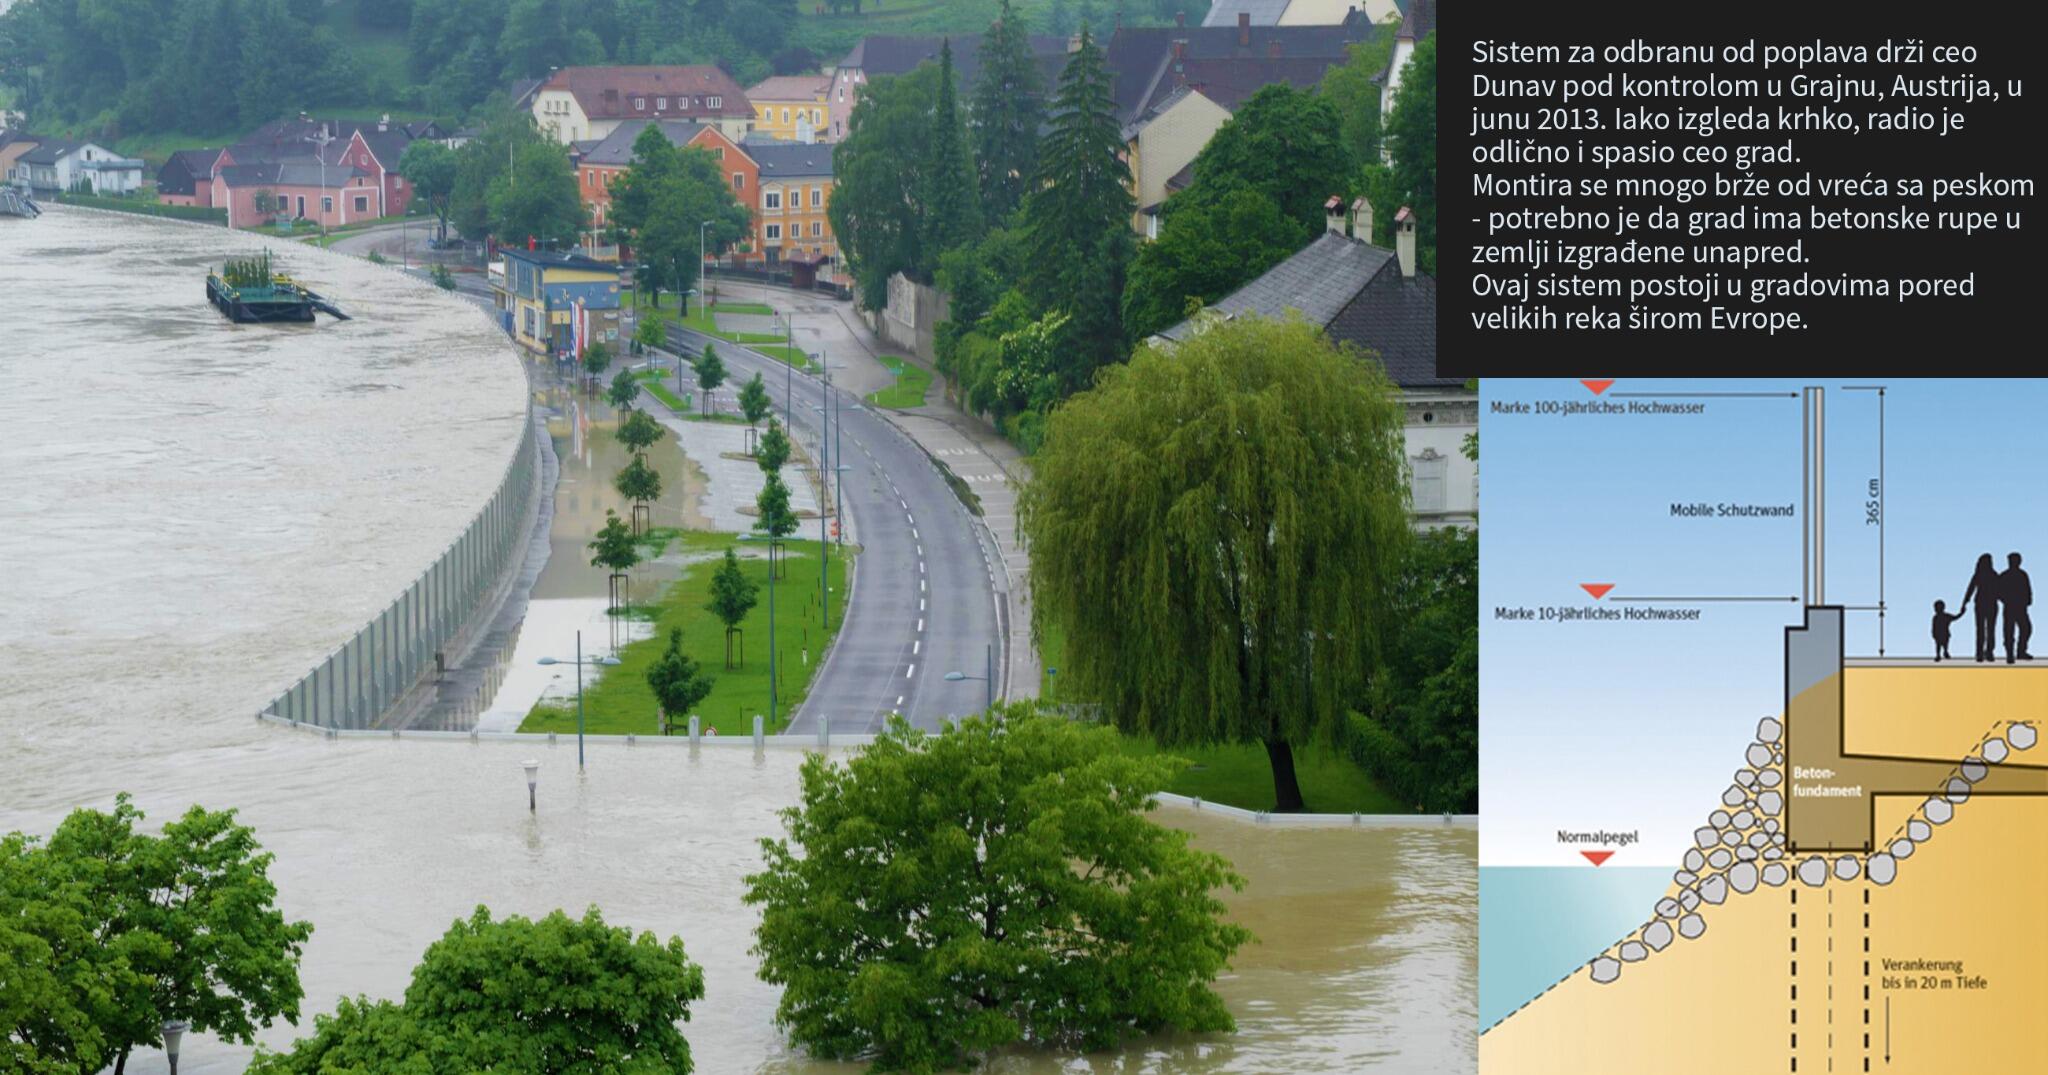 Poplave u Srbiji, Republici srpskoj... - Page 10 Bn2VXD-IIAA9e2u